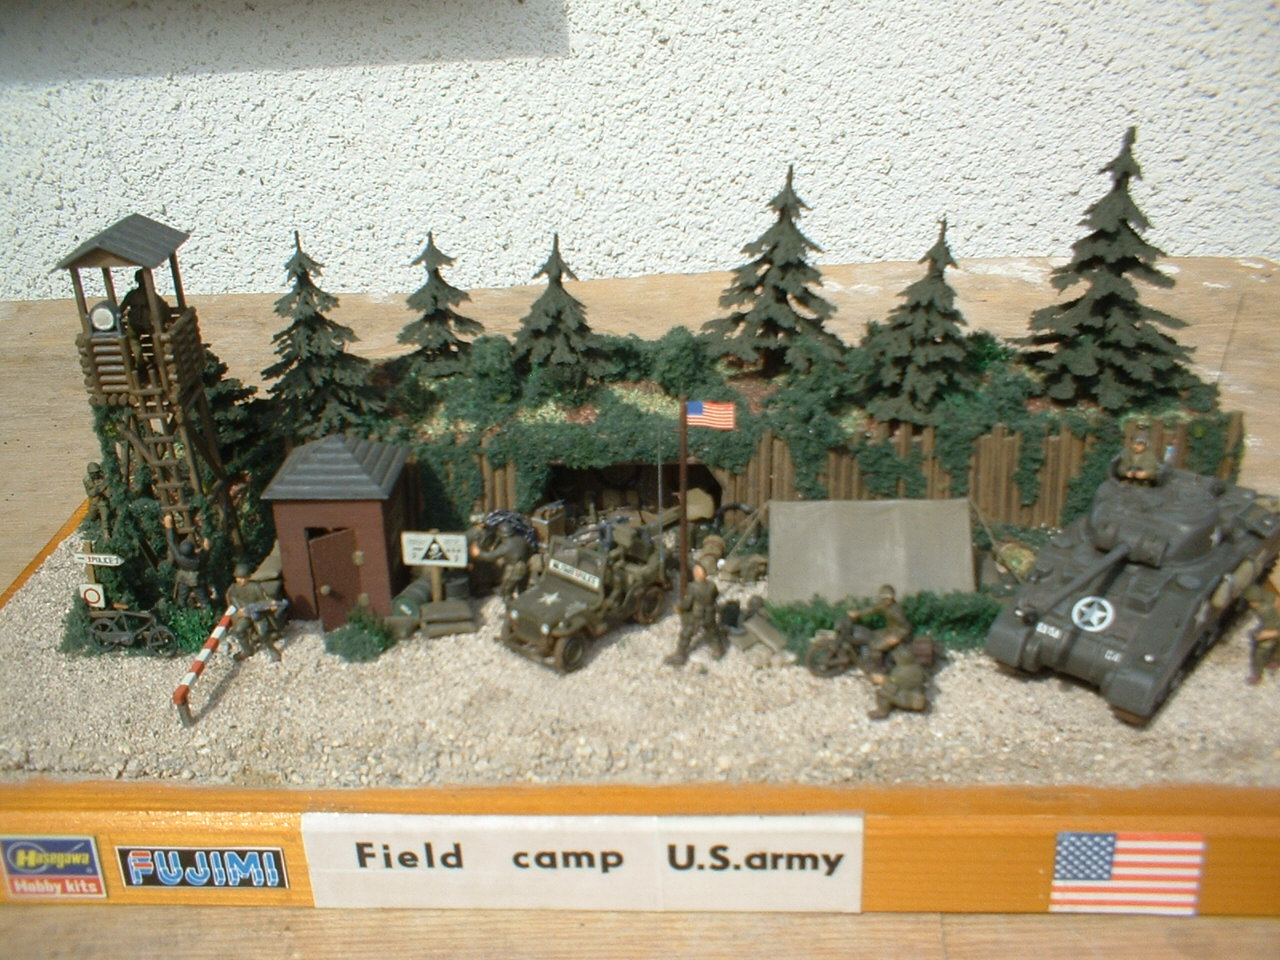 Field camp U.S.army